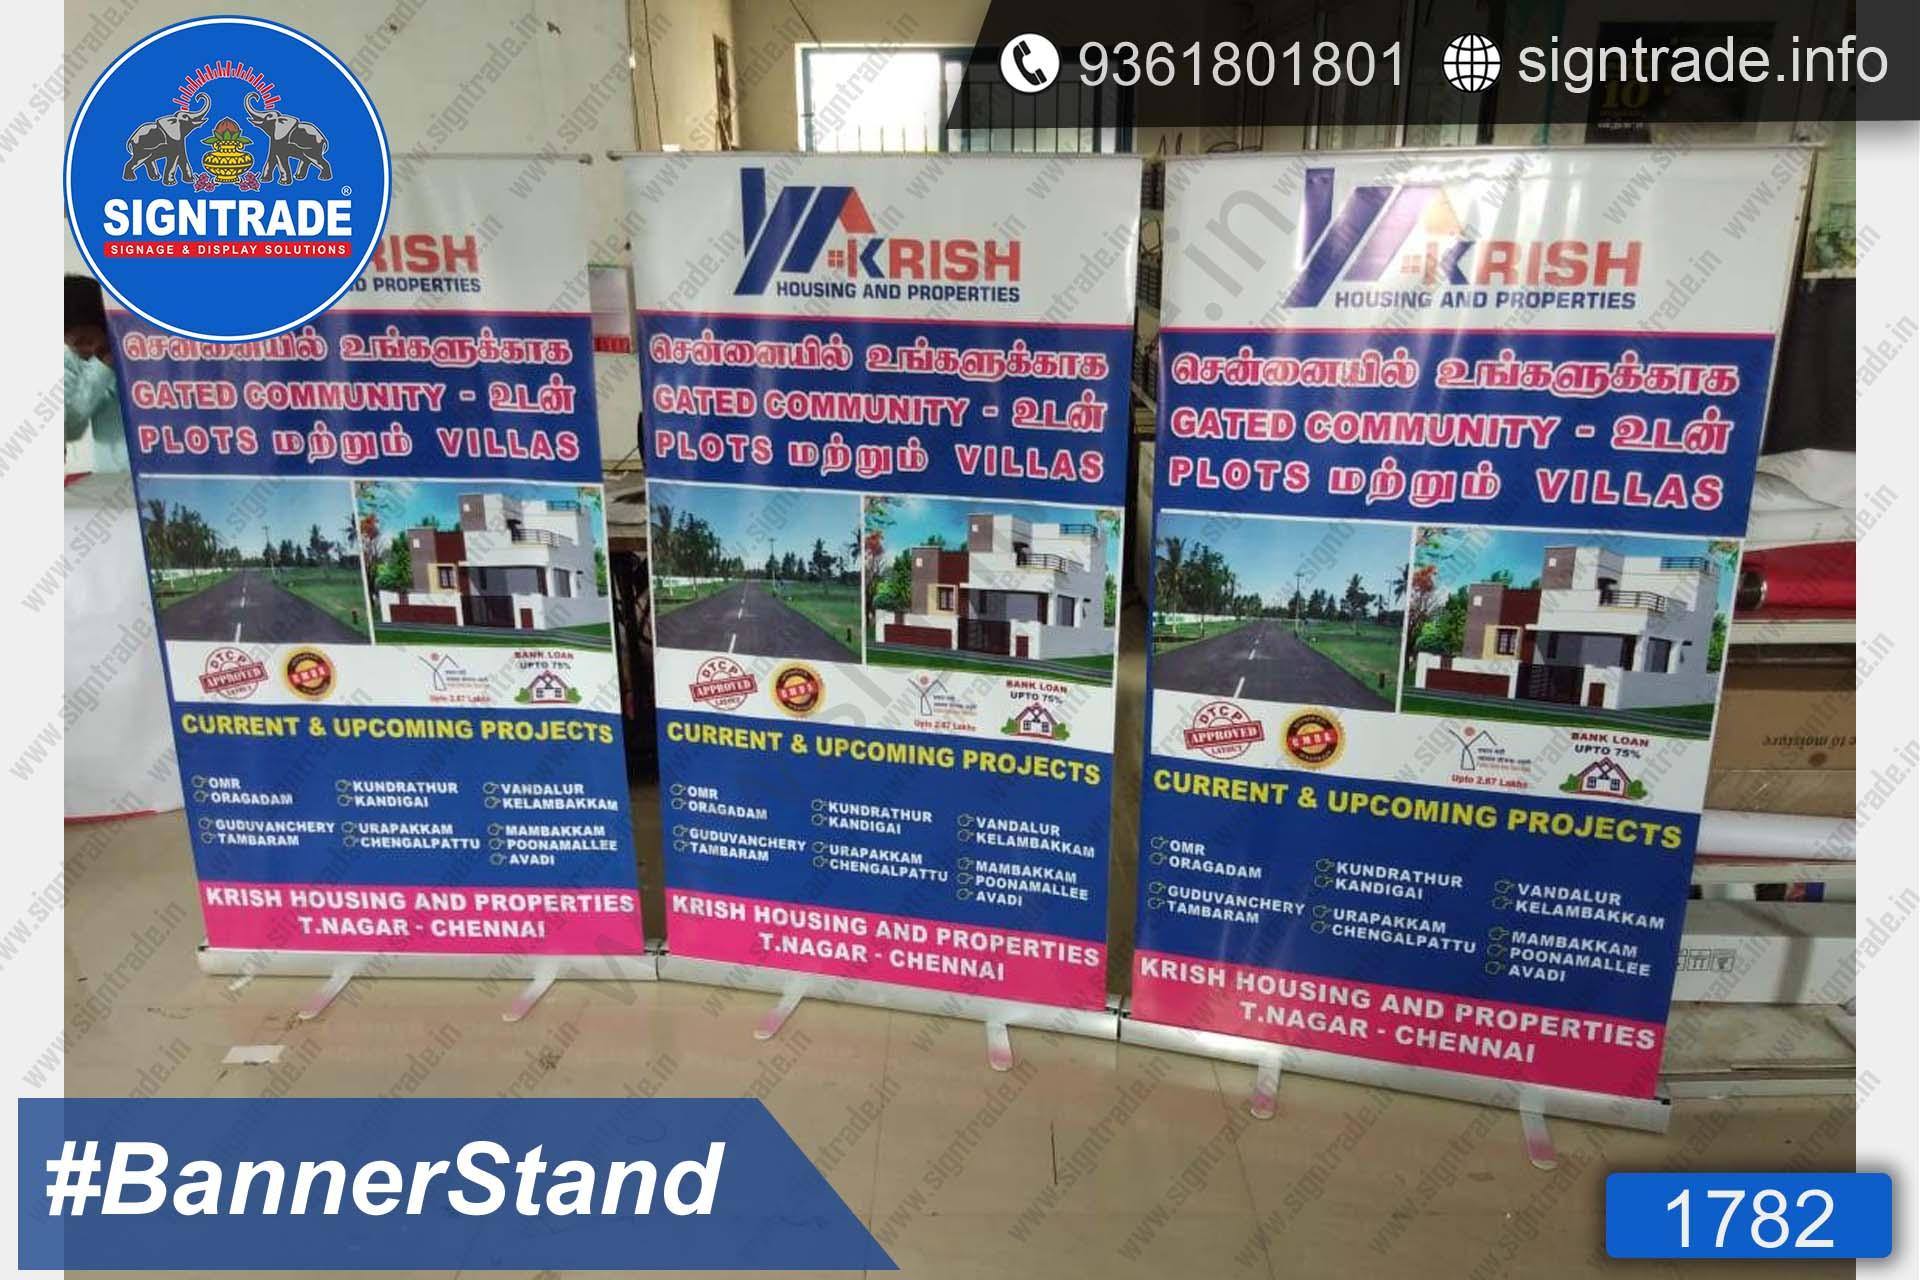 krish housing properties banner stand